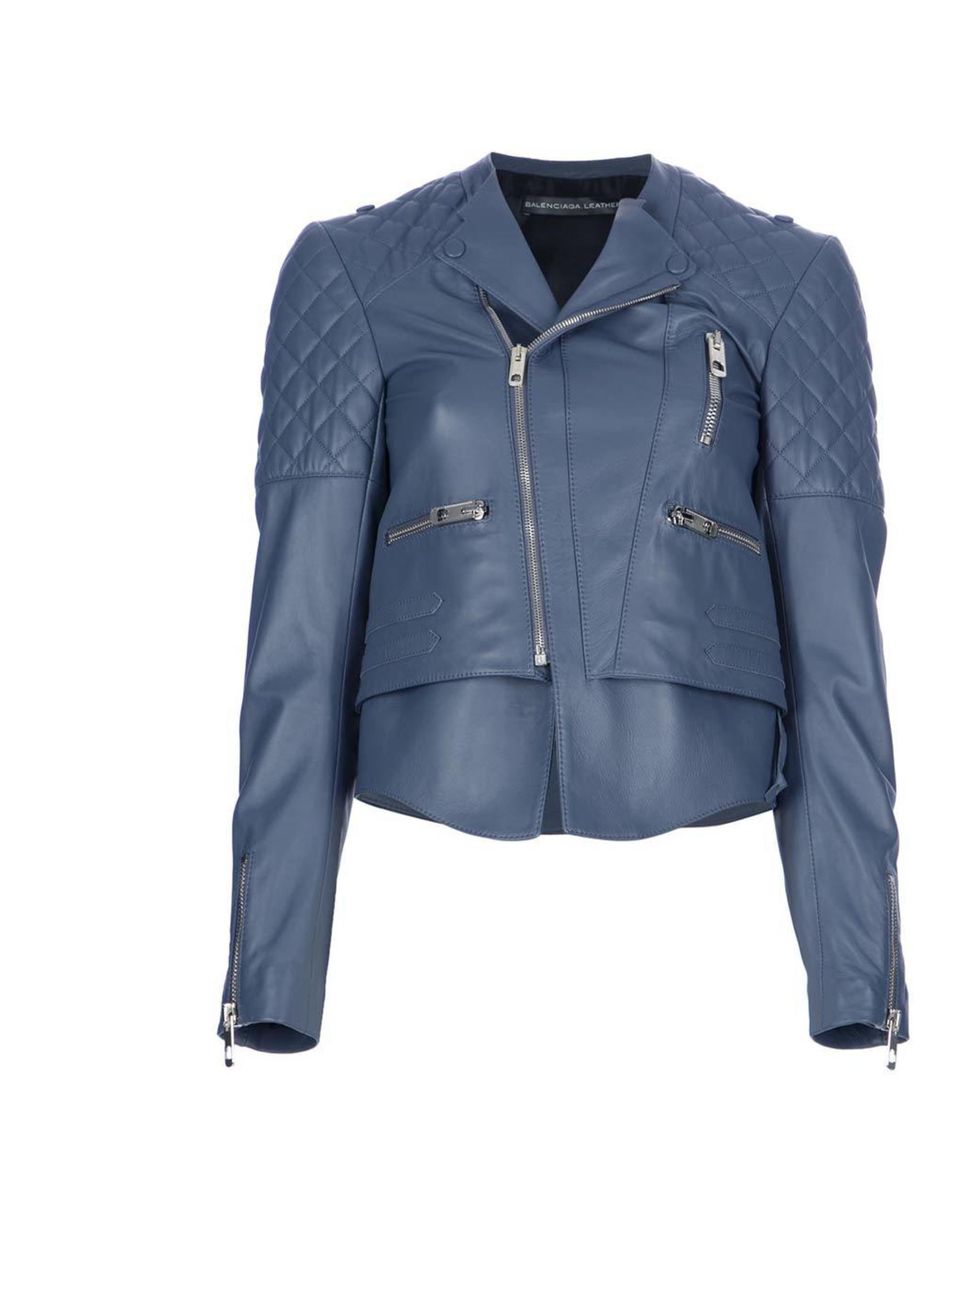 <p>BAlenciaga blue leather jacket at <a href="http://www.farfetch.com/shopping/women/balenciaga-quilted-leather-jacket-item-10319092.aspx">farfetch.com </a>, £1615</p>